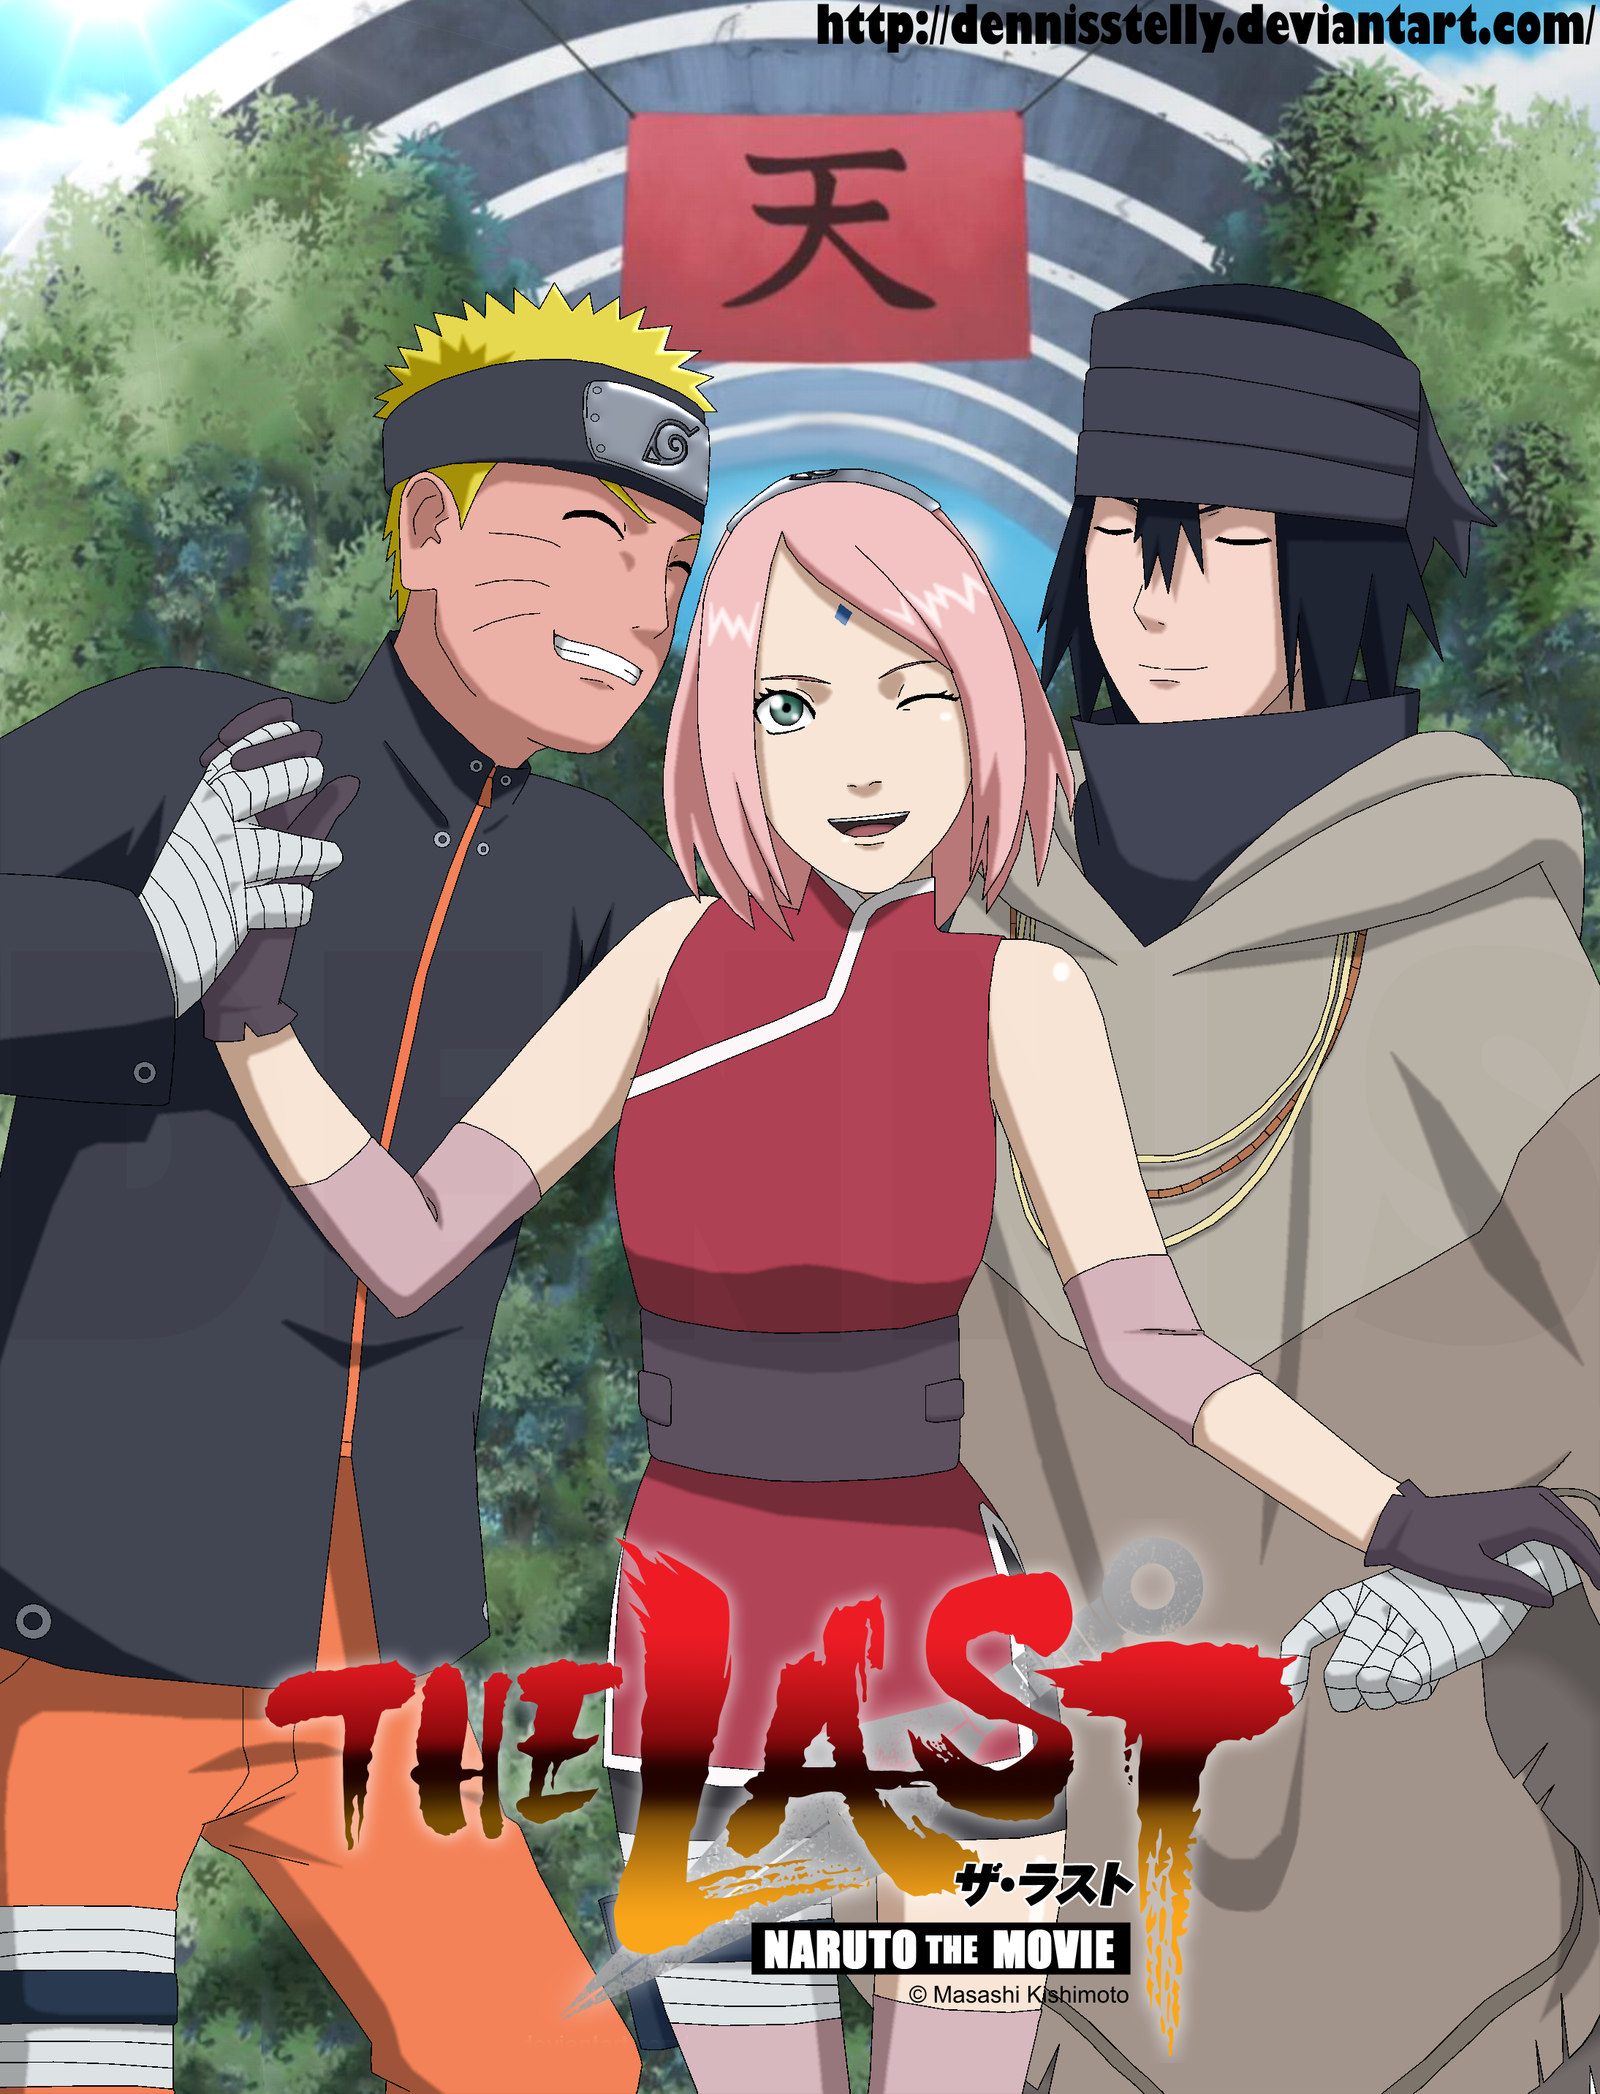  Naruto  The Last  Movie Wallpaper  WallpaperSafari